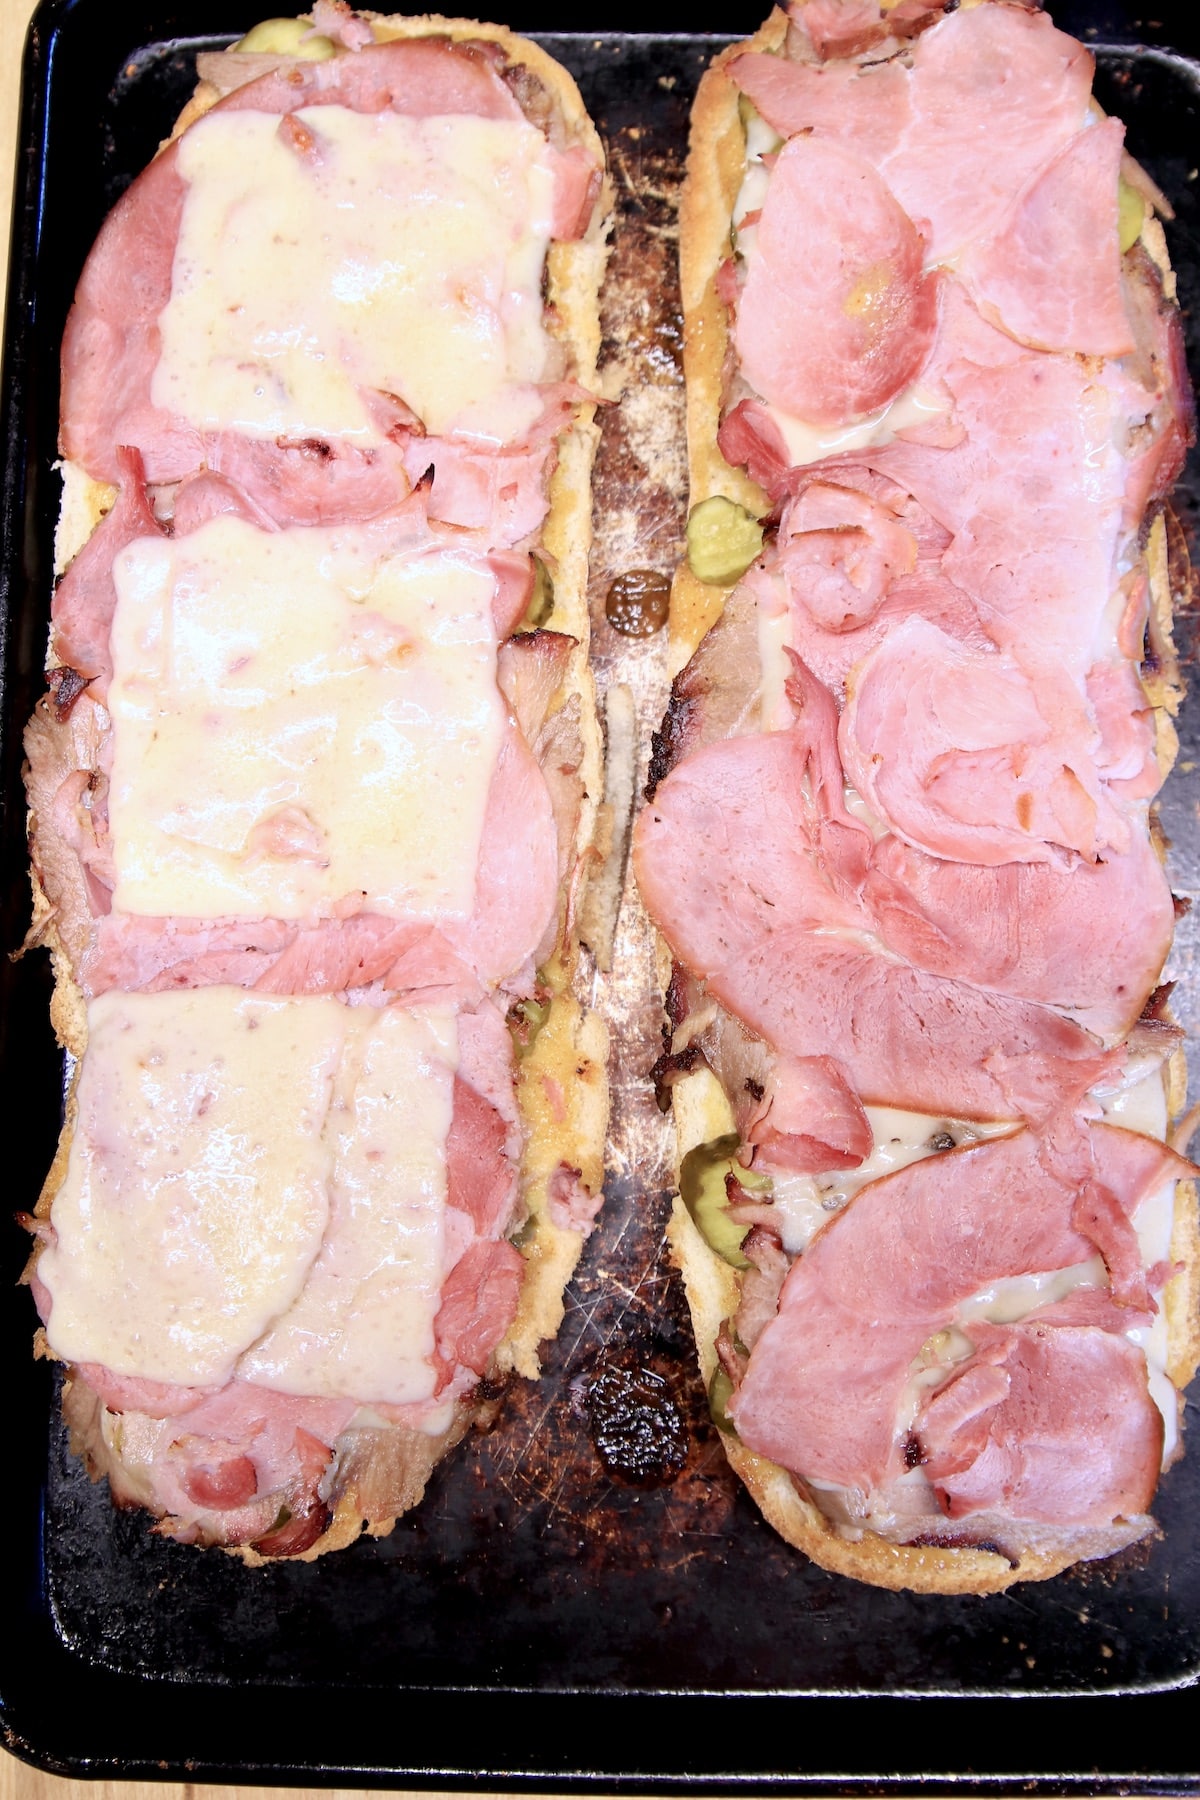 Toasted smoked pork sandwich on Italian loaf.